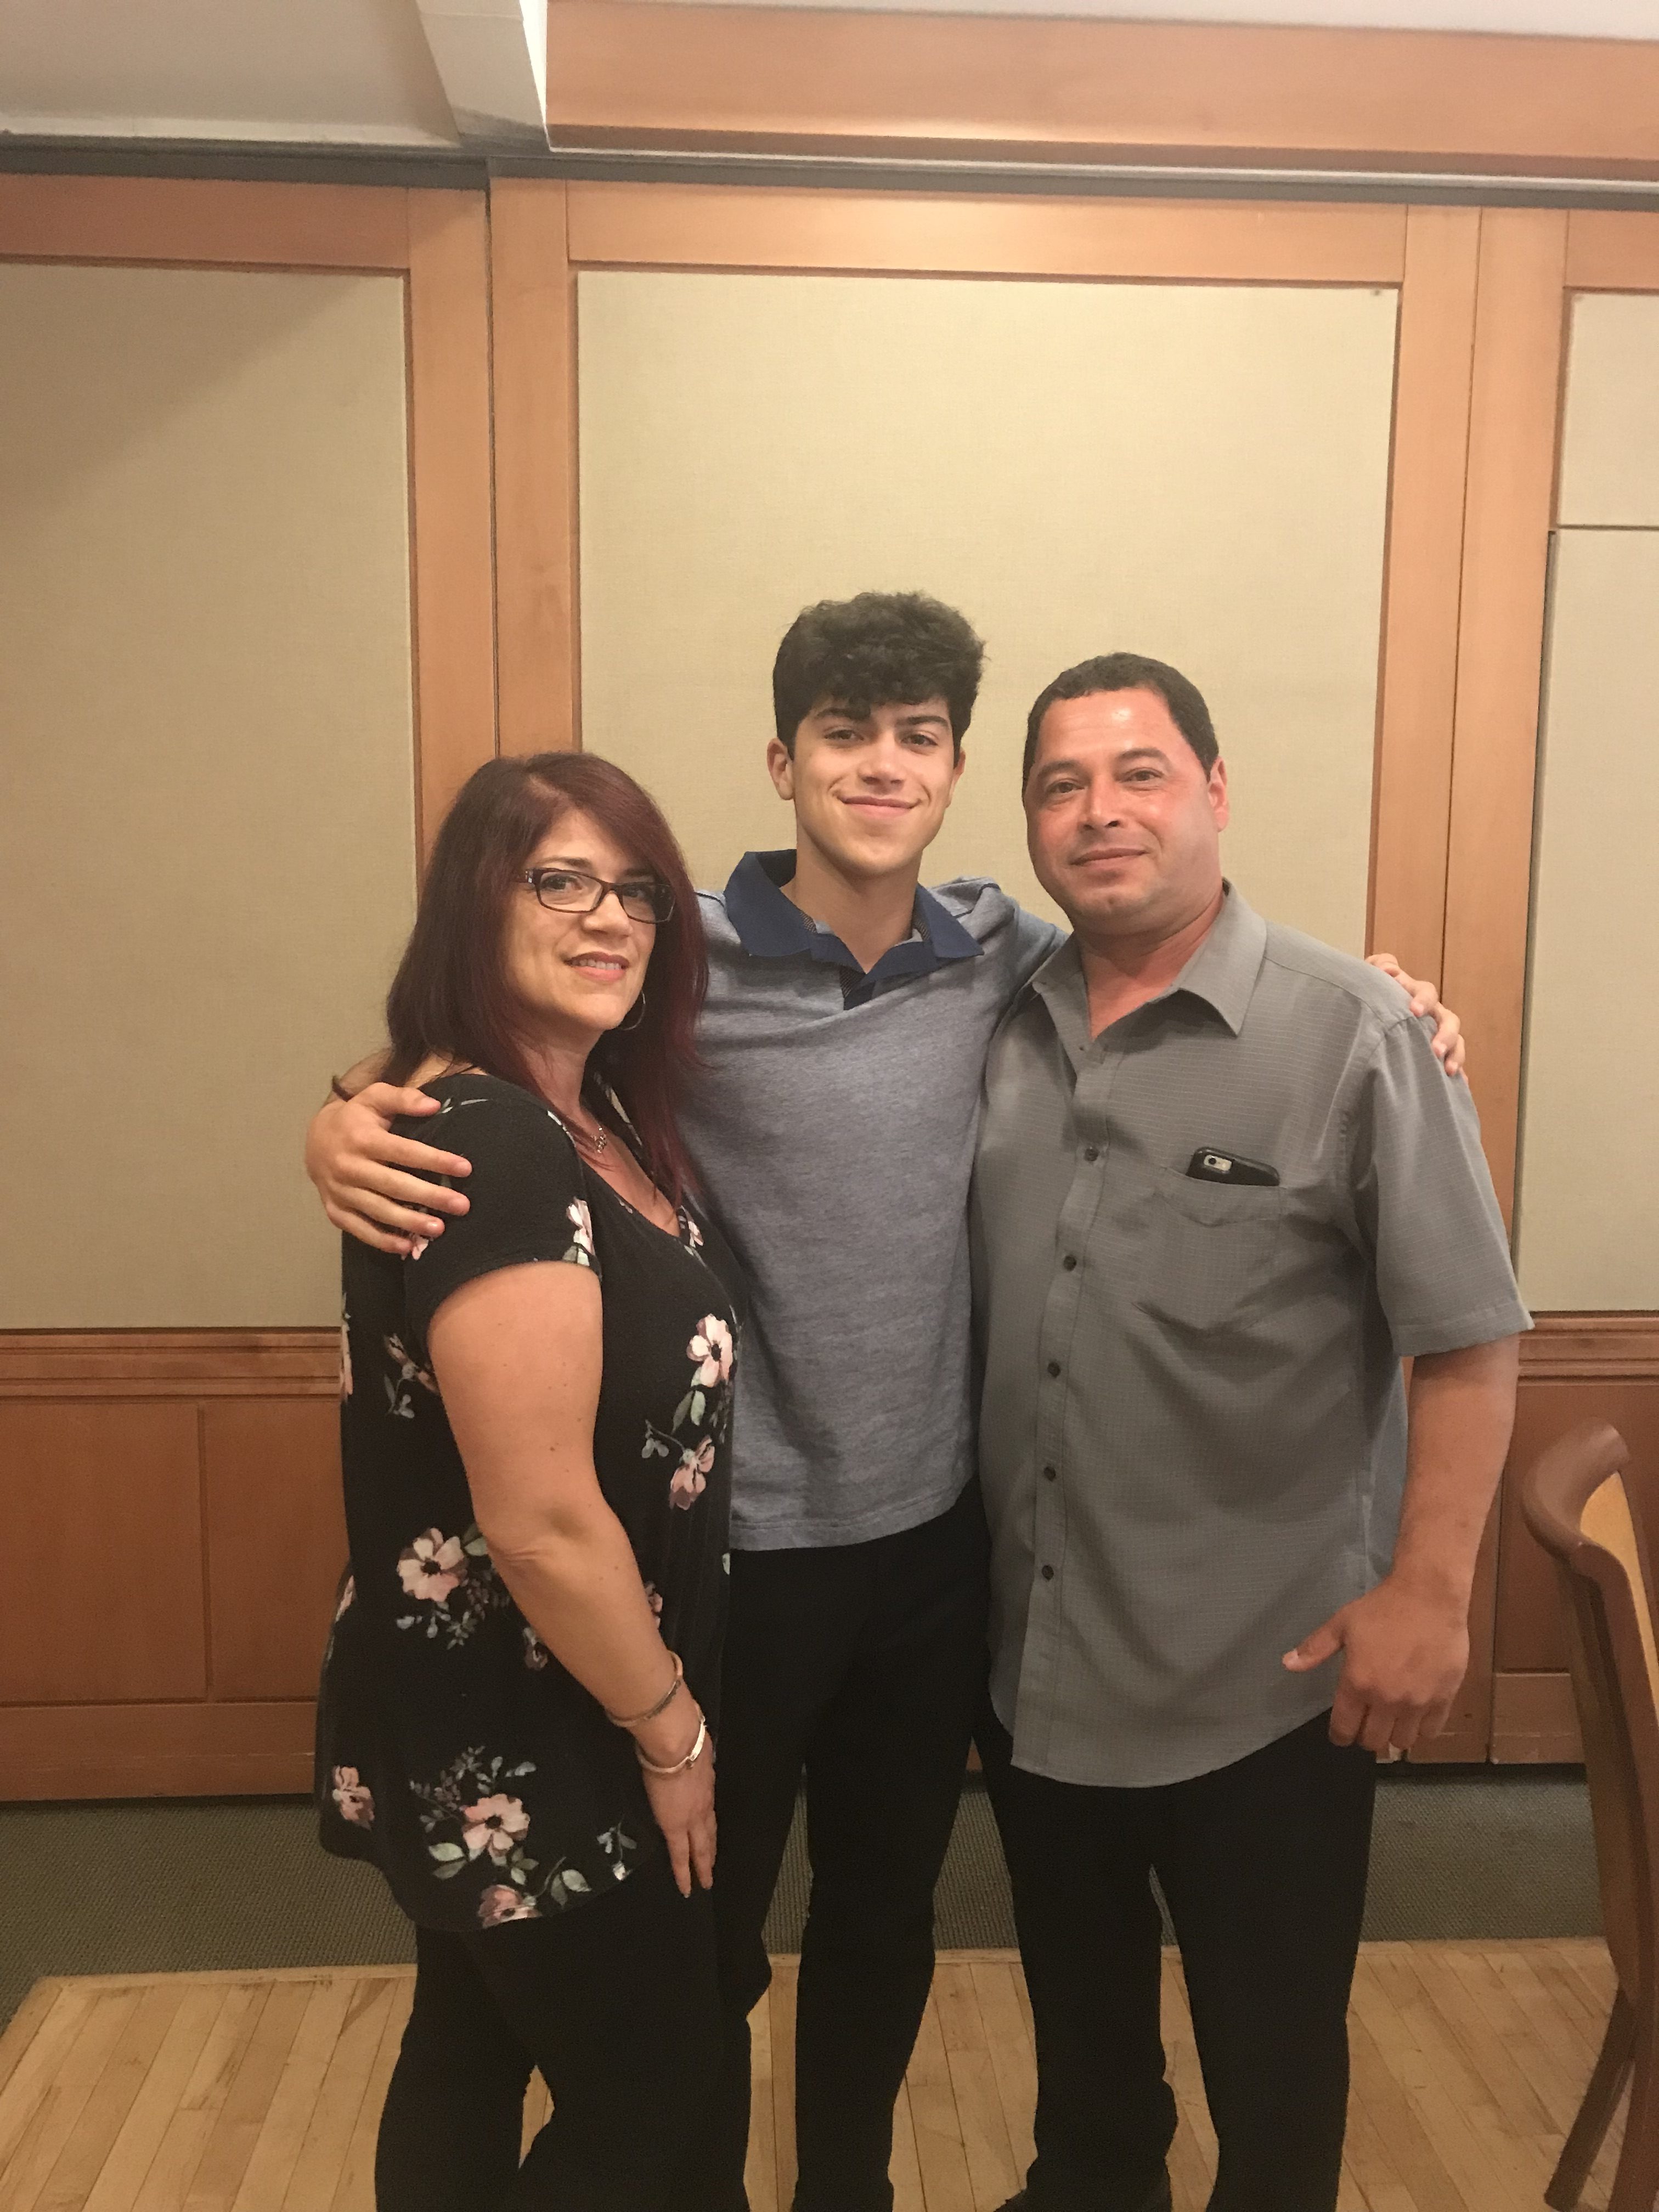 Rafael and his parents